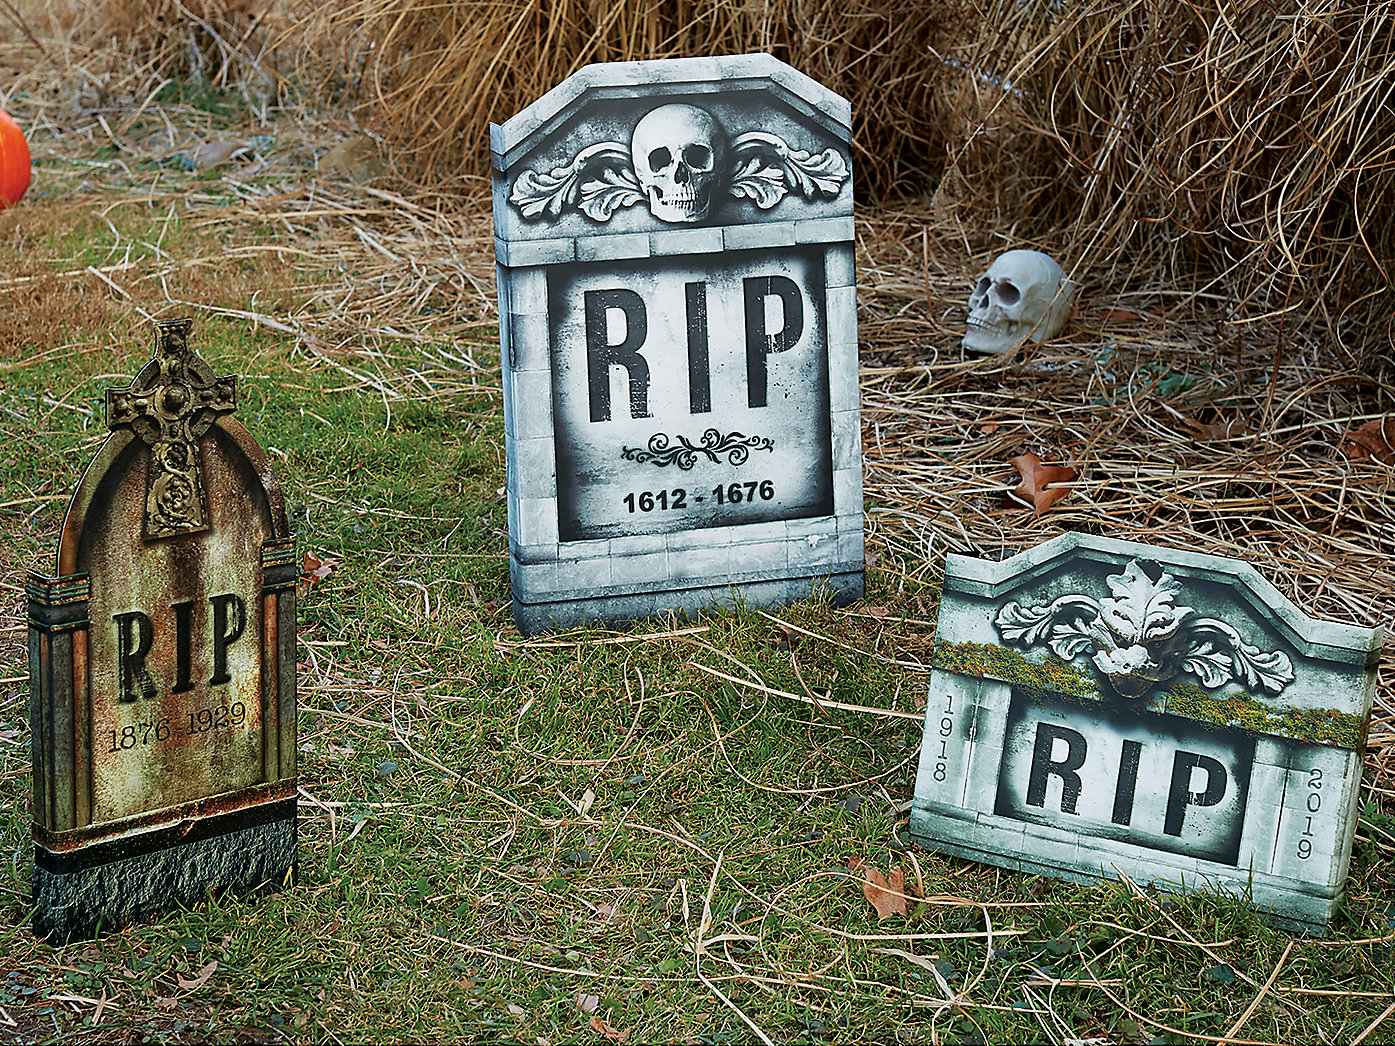 Three fake gravestones decorating a front lawn.